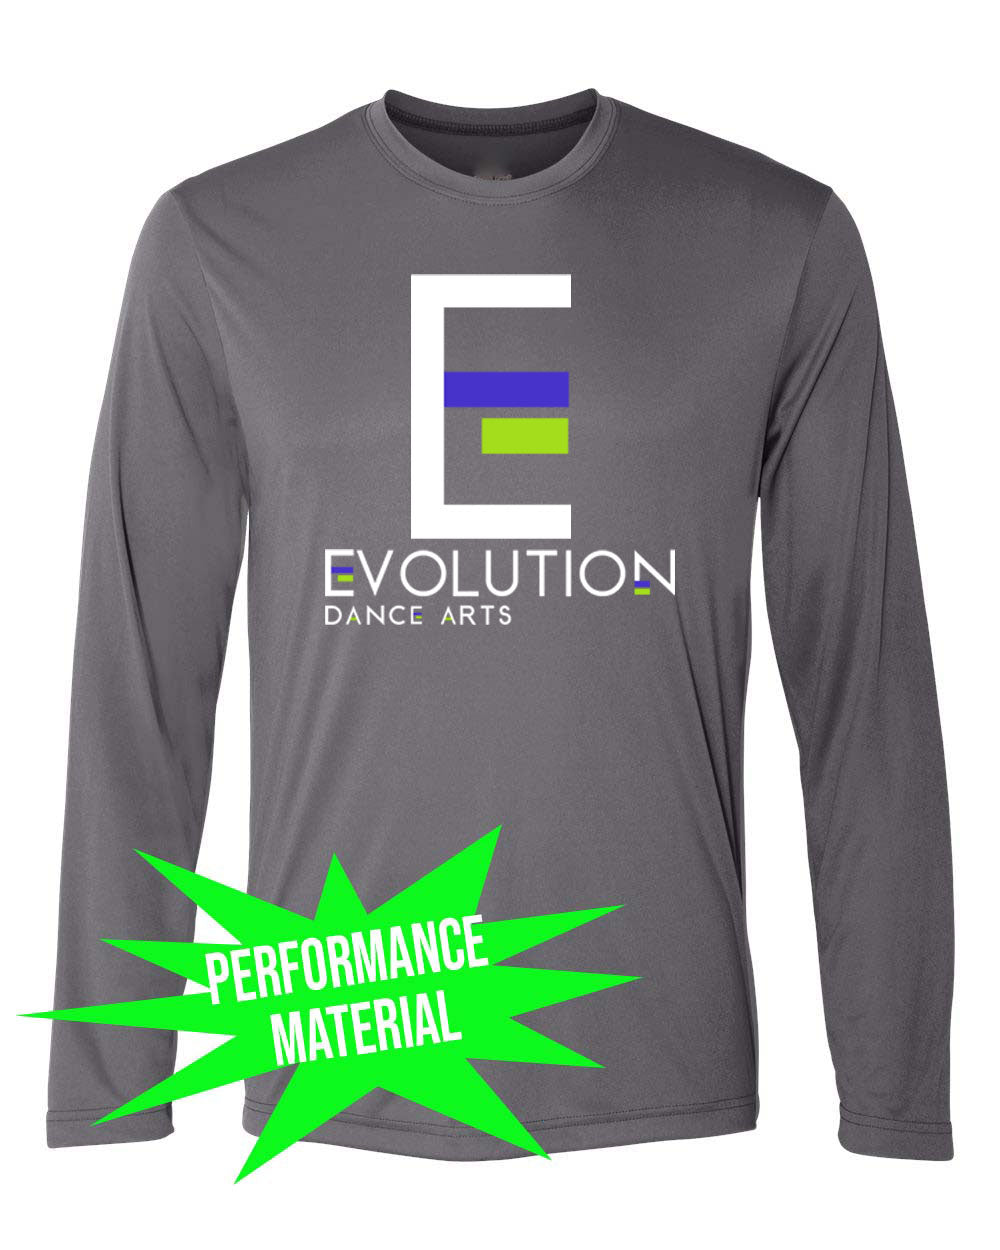 Evolution Dance Arts Performance Material Design 2 Long Sleeve Shirt